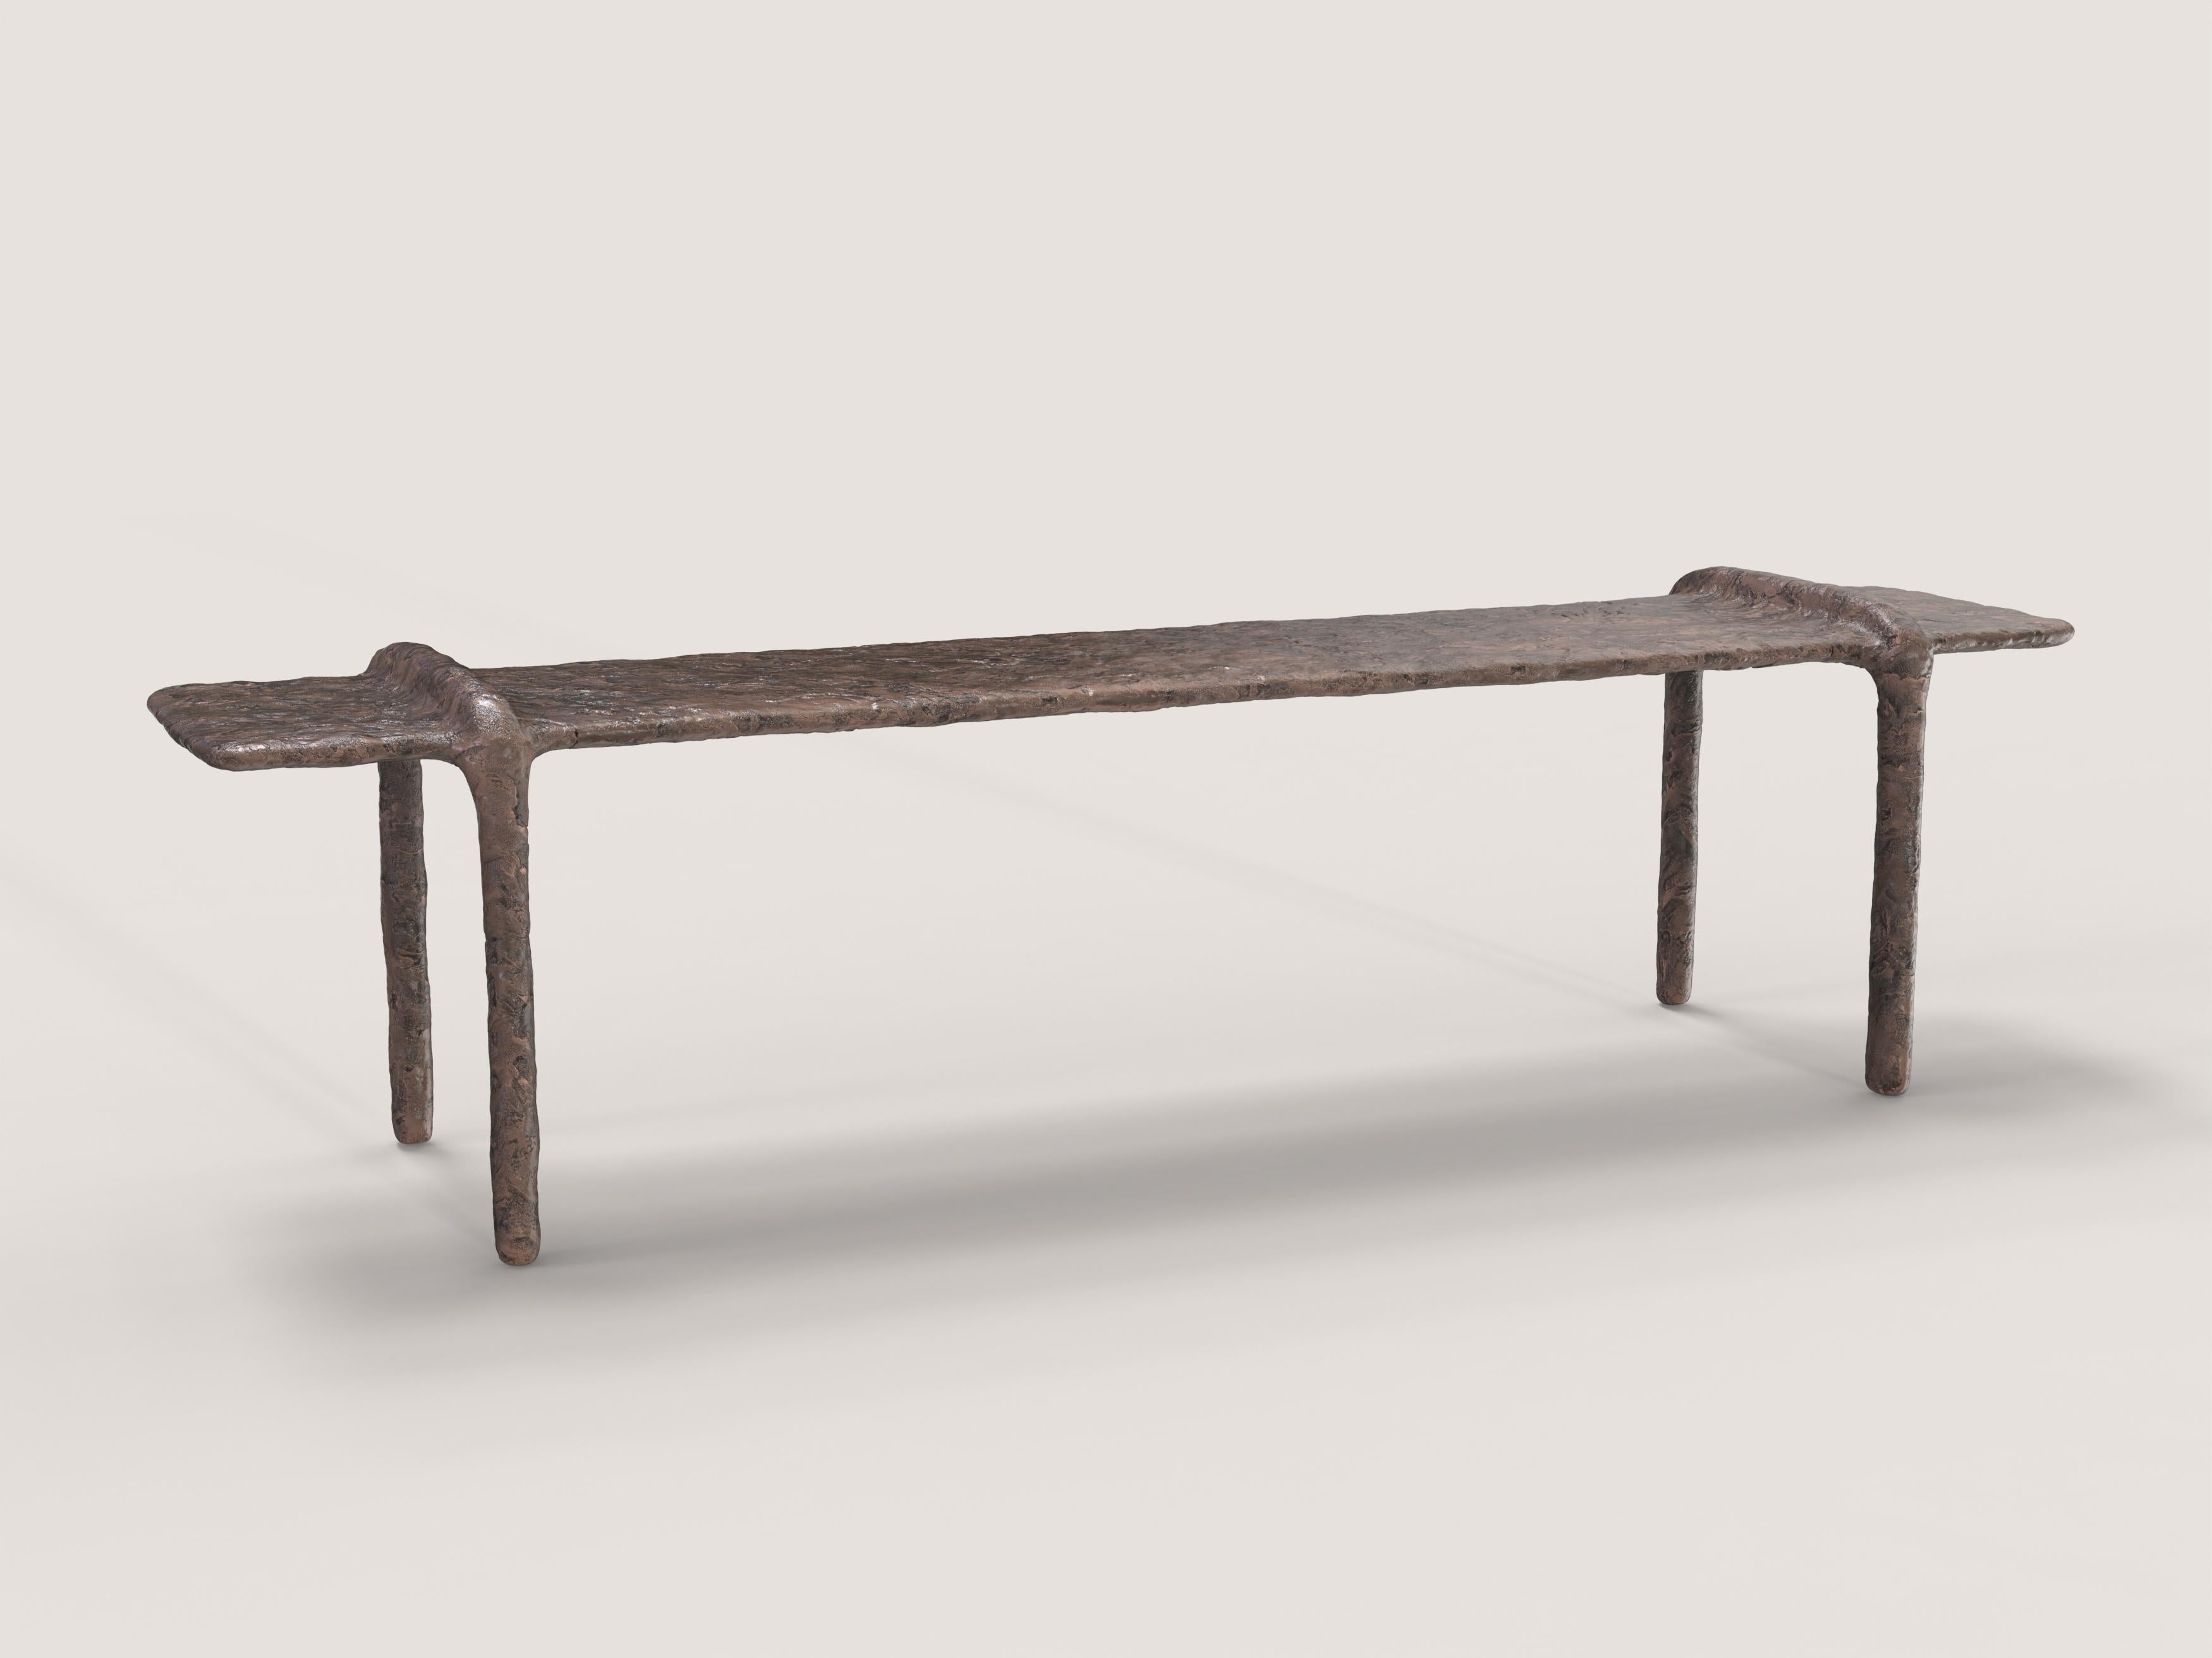 Cast Contemporary Limited Edition Bronze Low Table, Ala V2 by Edizione Limitata For Sale